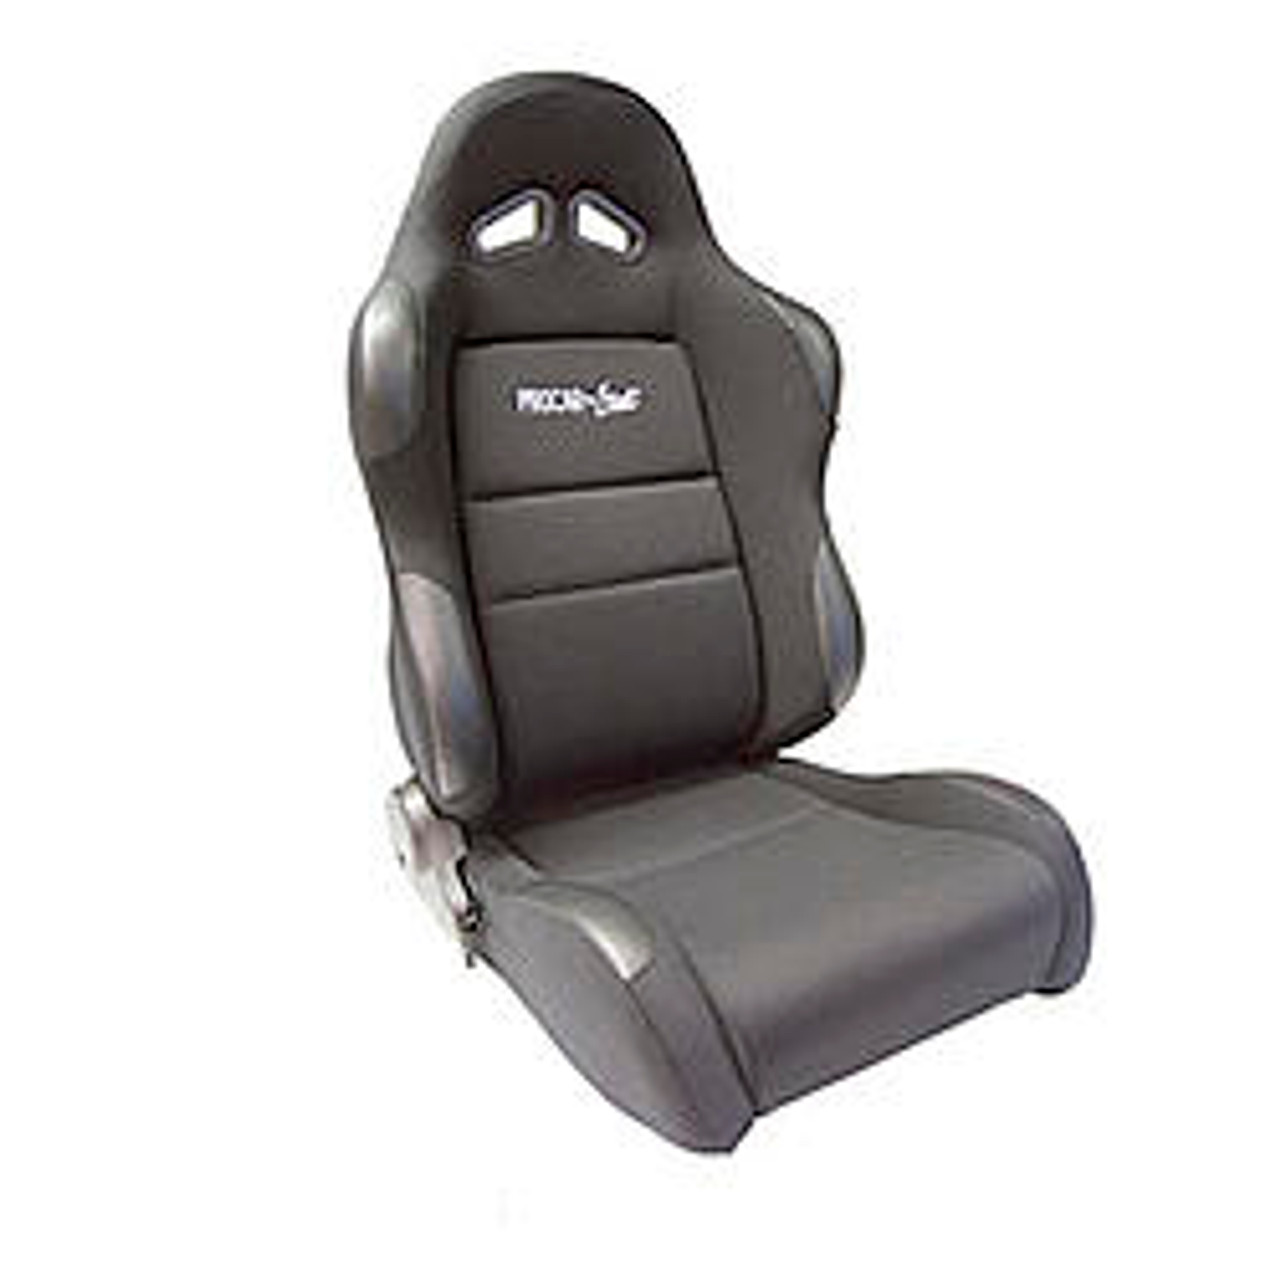 Scat Sportsman Racing Seat - Right - Black Velour - SCA80-1606-61R